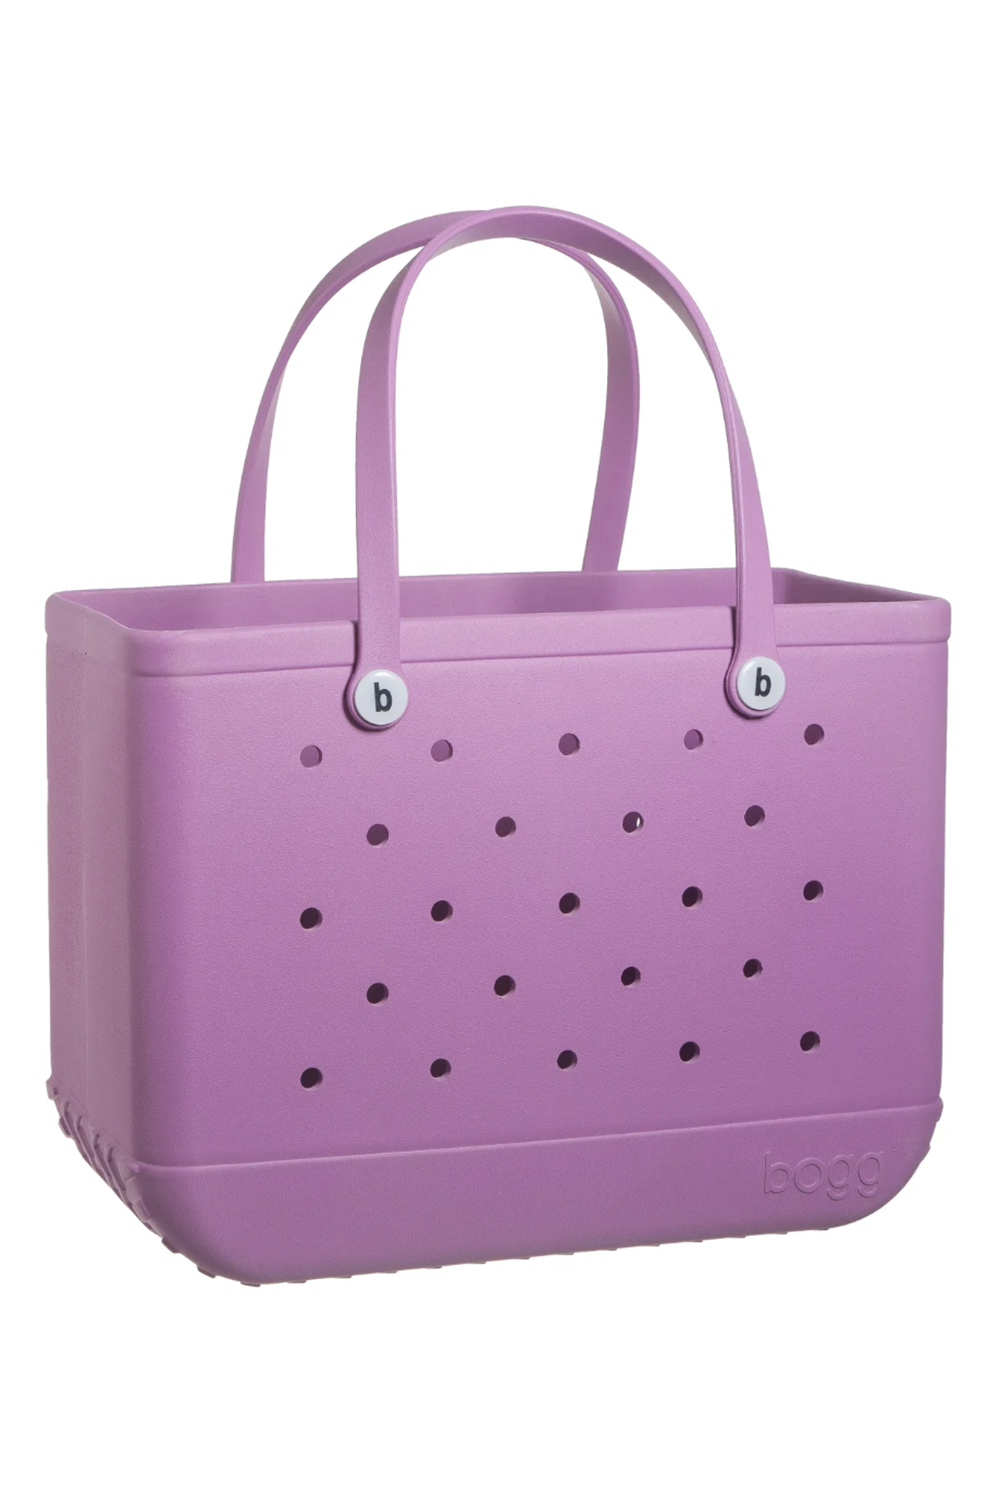 Bogg Bag Original Large Bogg Bag in Raspberry Purple